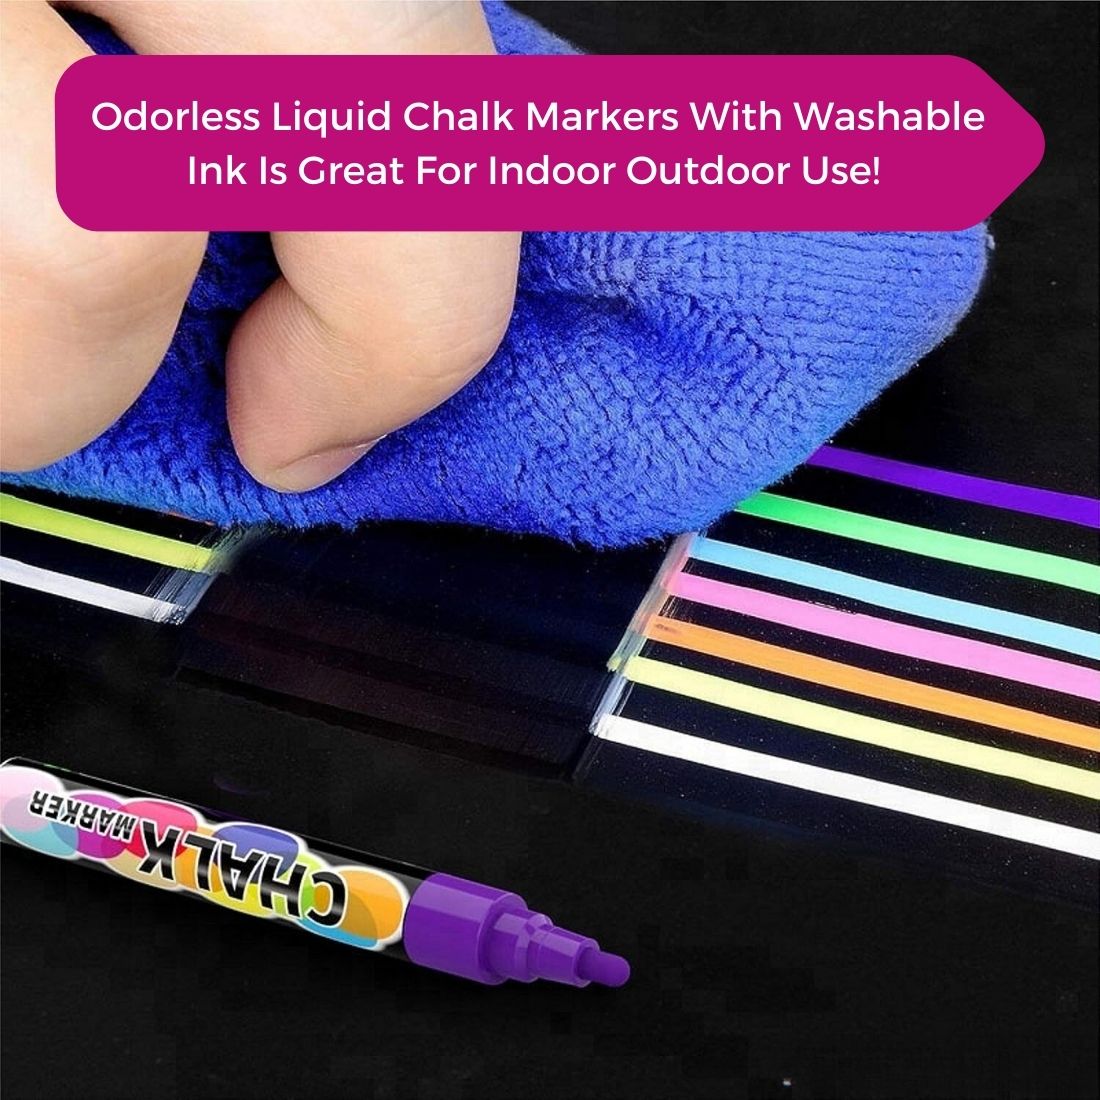 ARTISTRO 8 Neon Chalk Markers - Erasable Chalk Pens with 6mm Reversibl –  WoodArtSupply